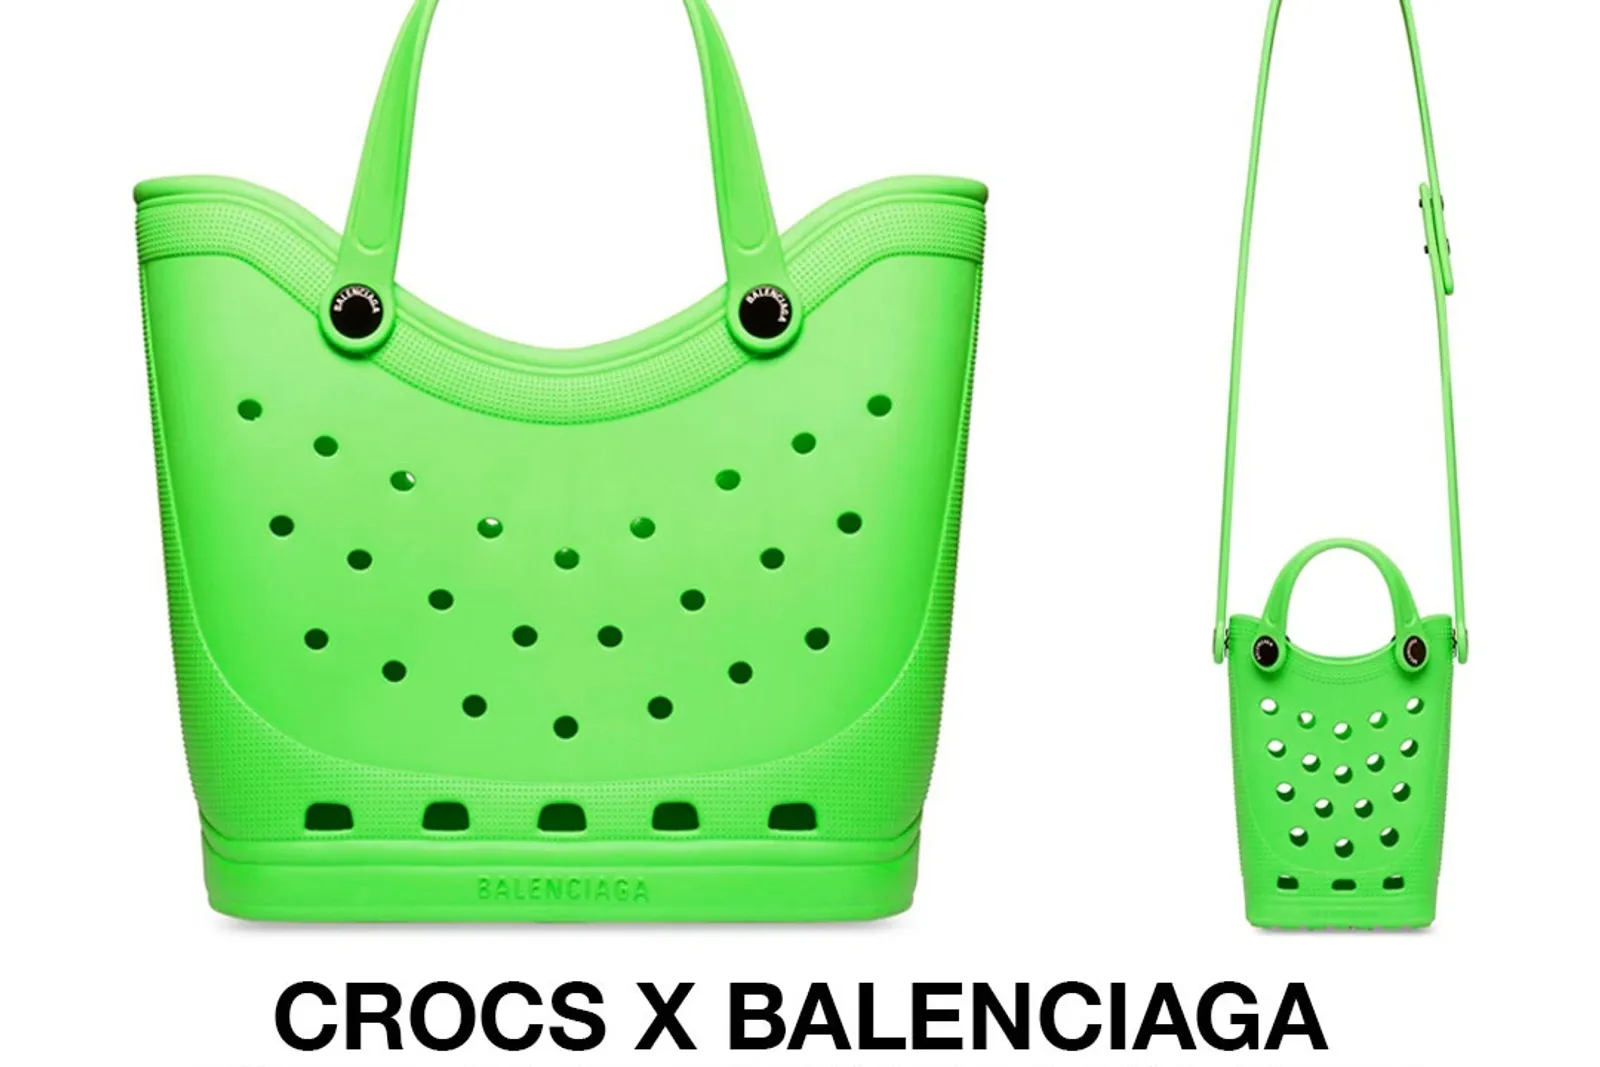 Rilis Produk Baru, Desain Balenciaga x Crocs Makin Nyeleneh